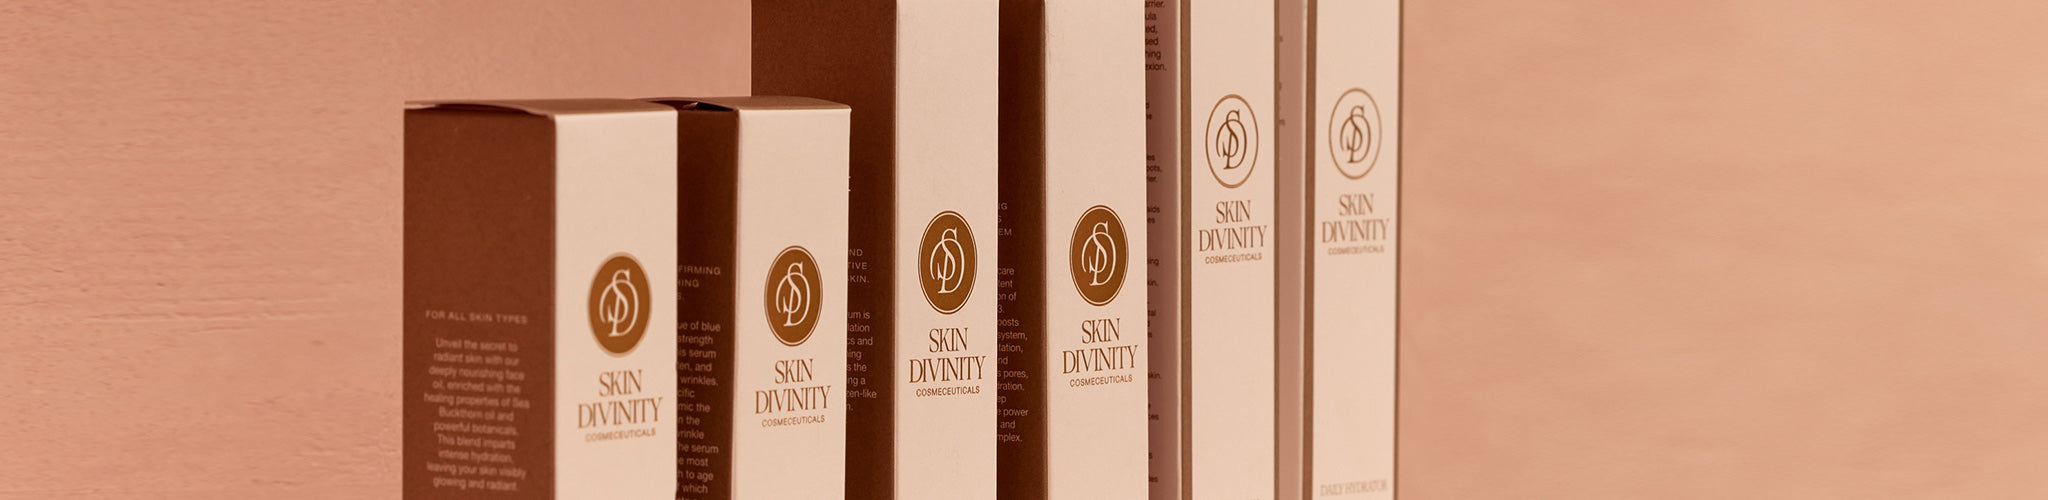 Skin Divinity Cosmeceuticals Collection Header